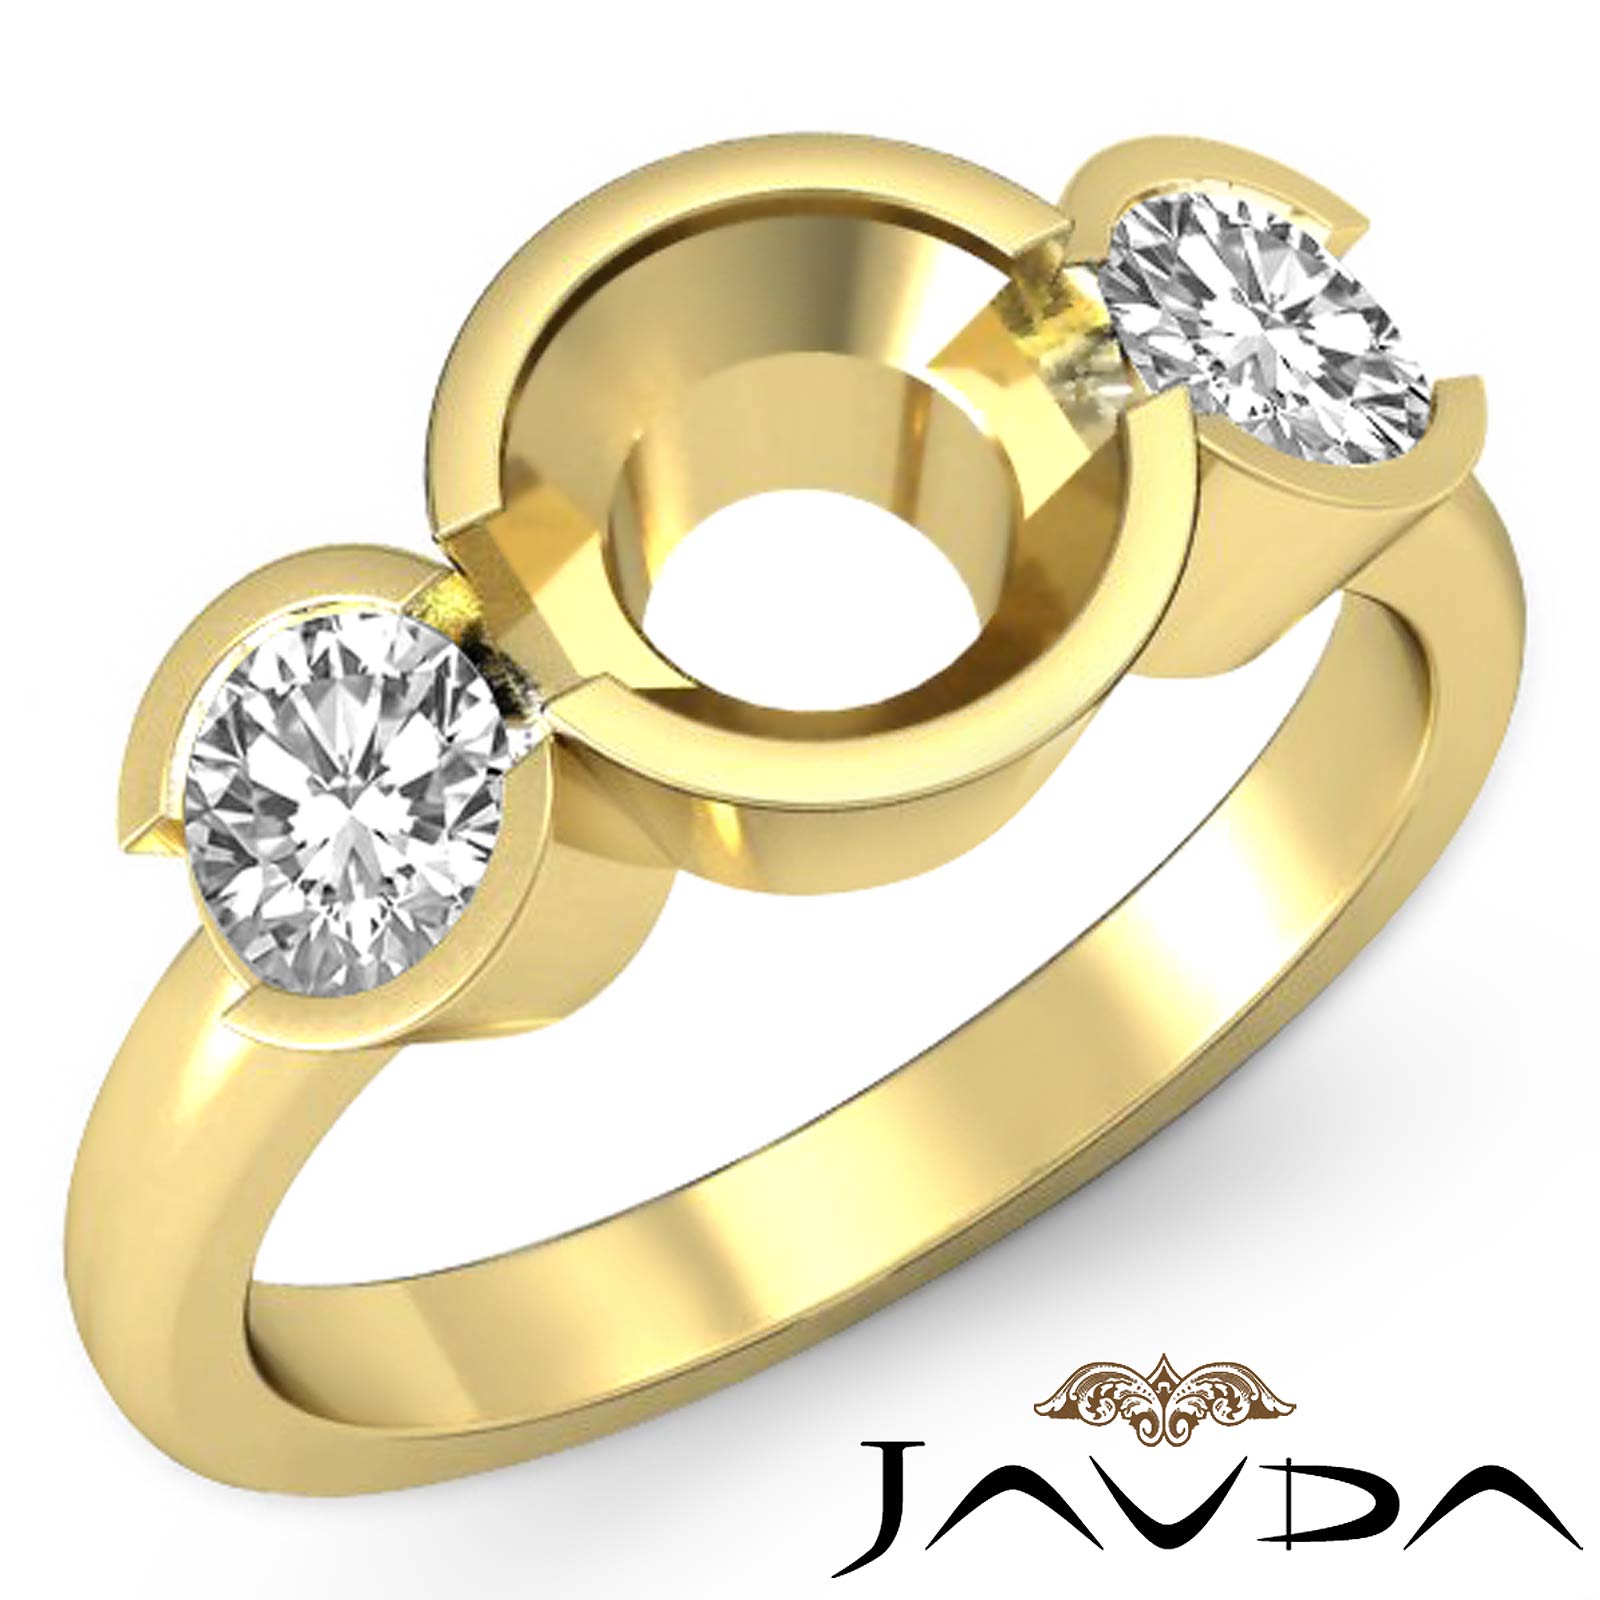 Fascinating Diamonds Bezel Round Cut 3 Stone Engagement Ring Yellow Gold